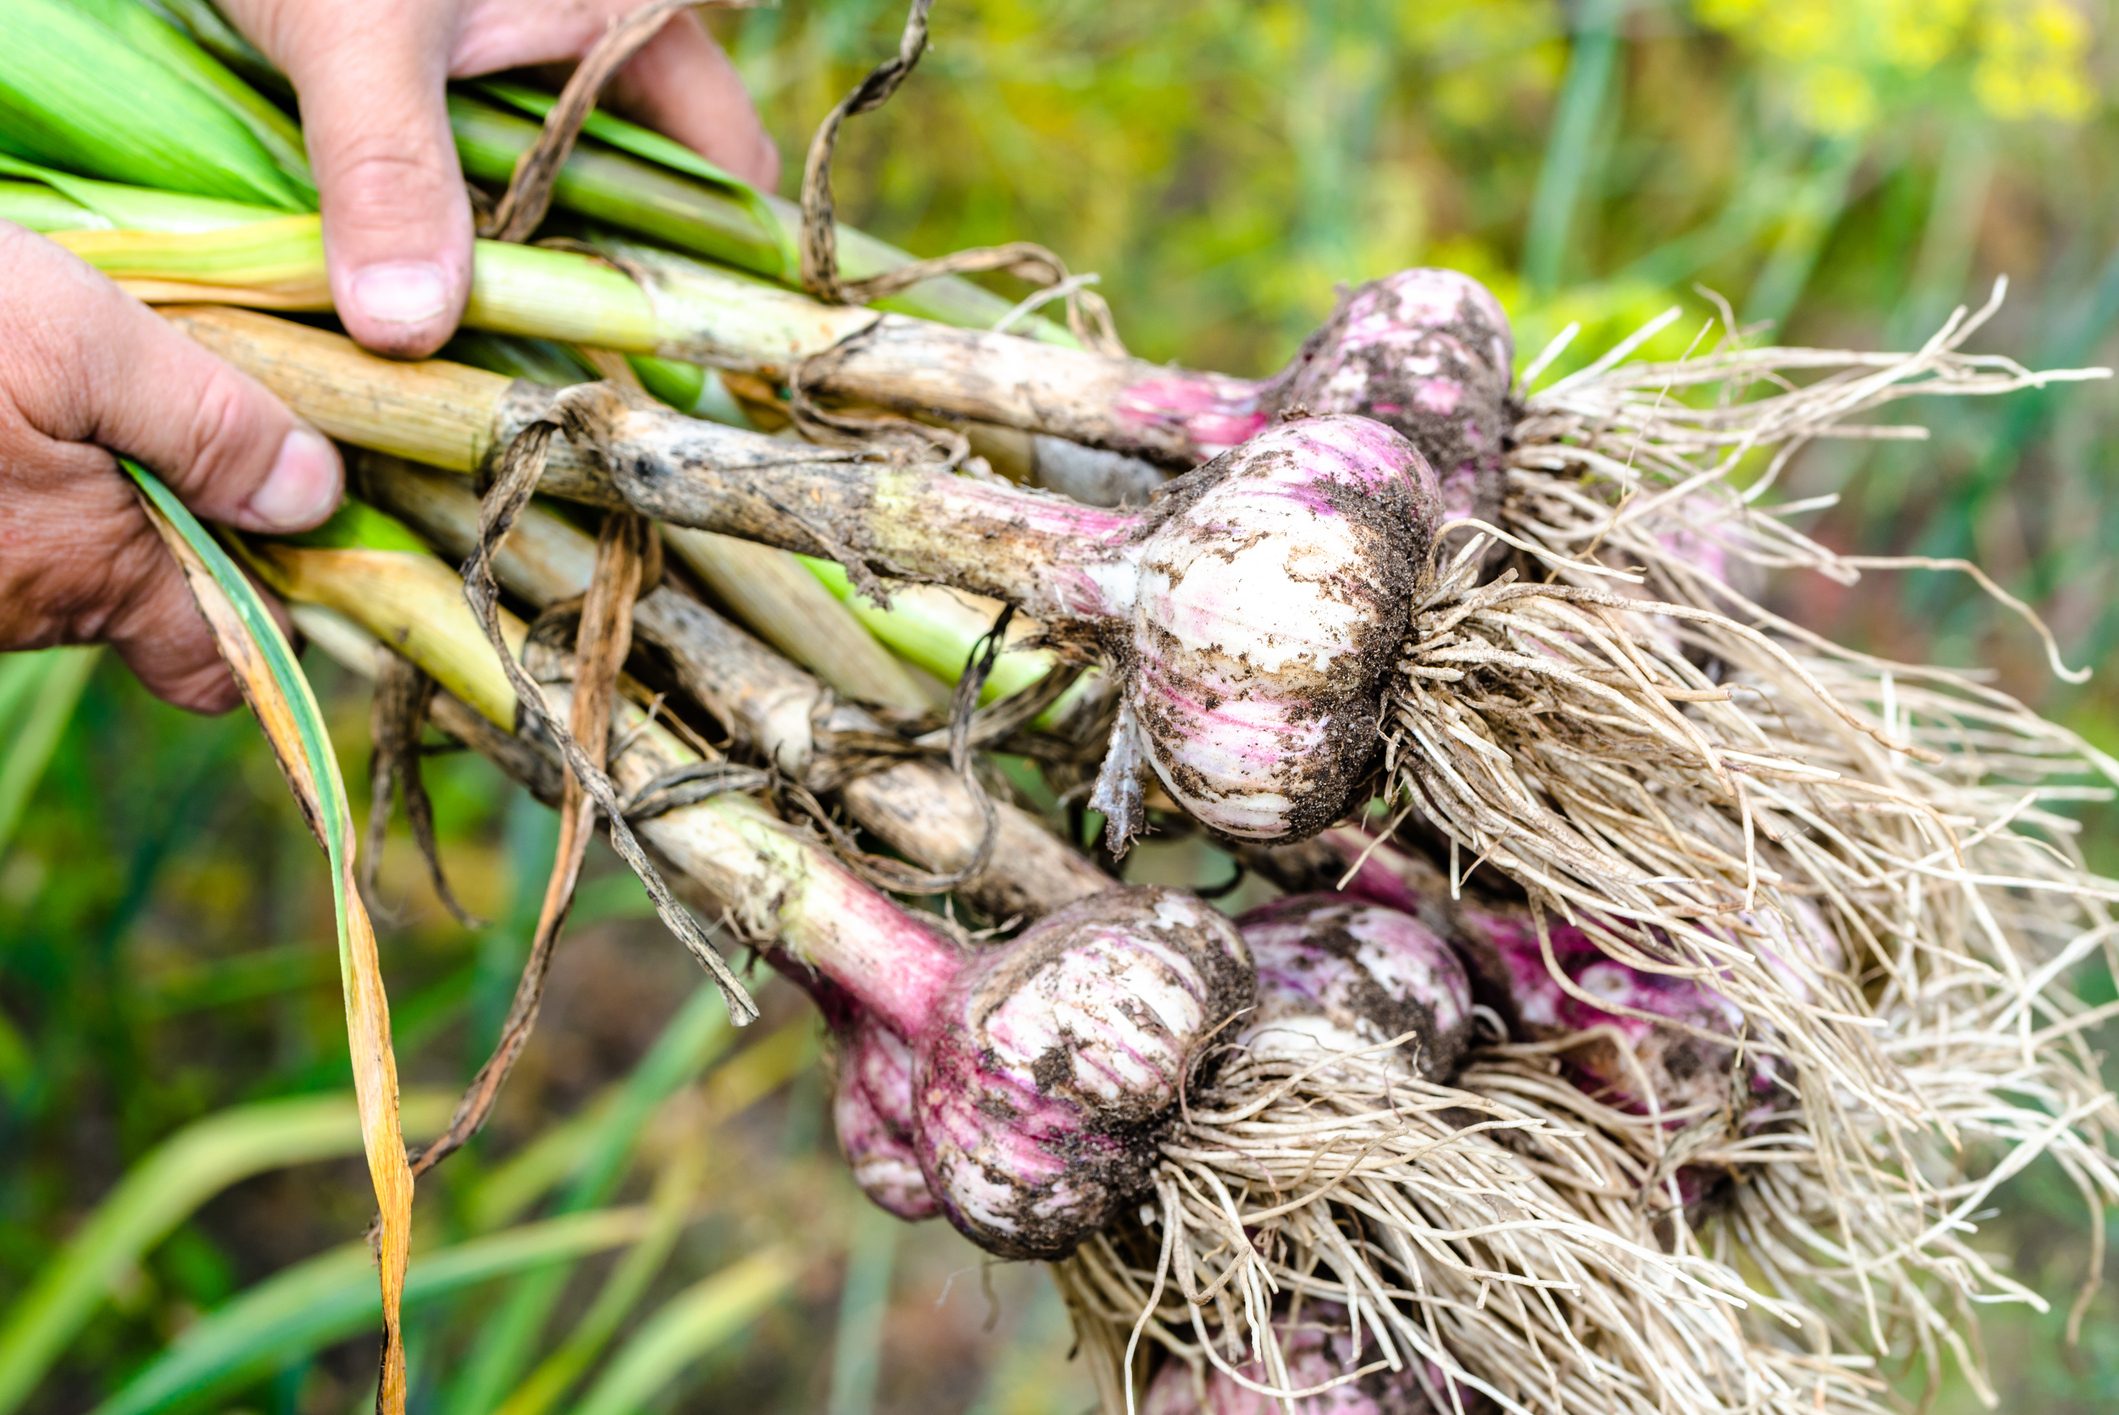 Harvesting garlic in the garden. Farmer with freshly harvested vegetables, organic farming concept.